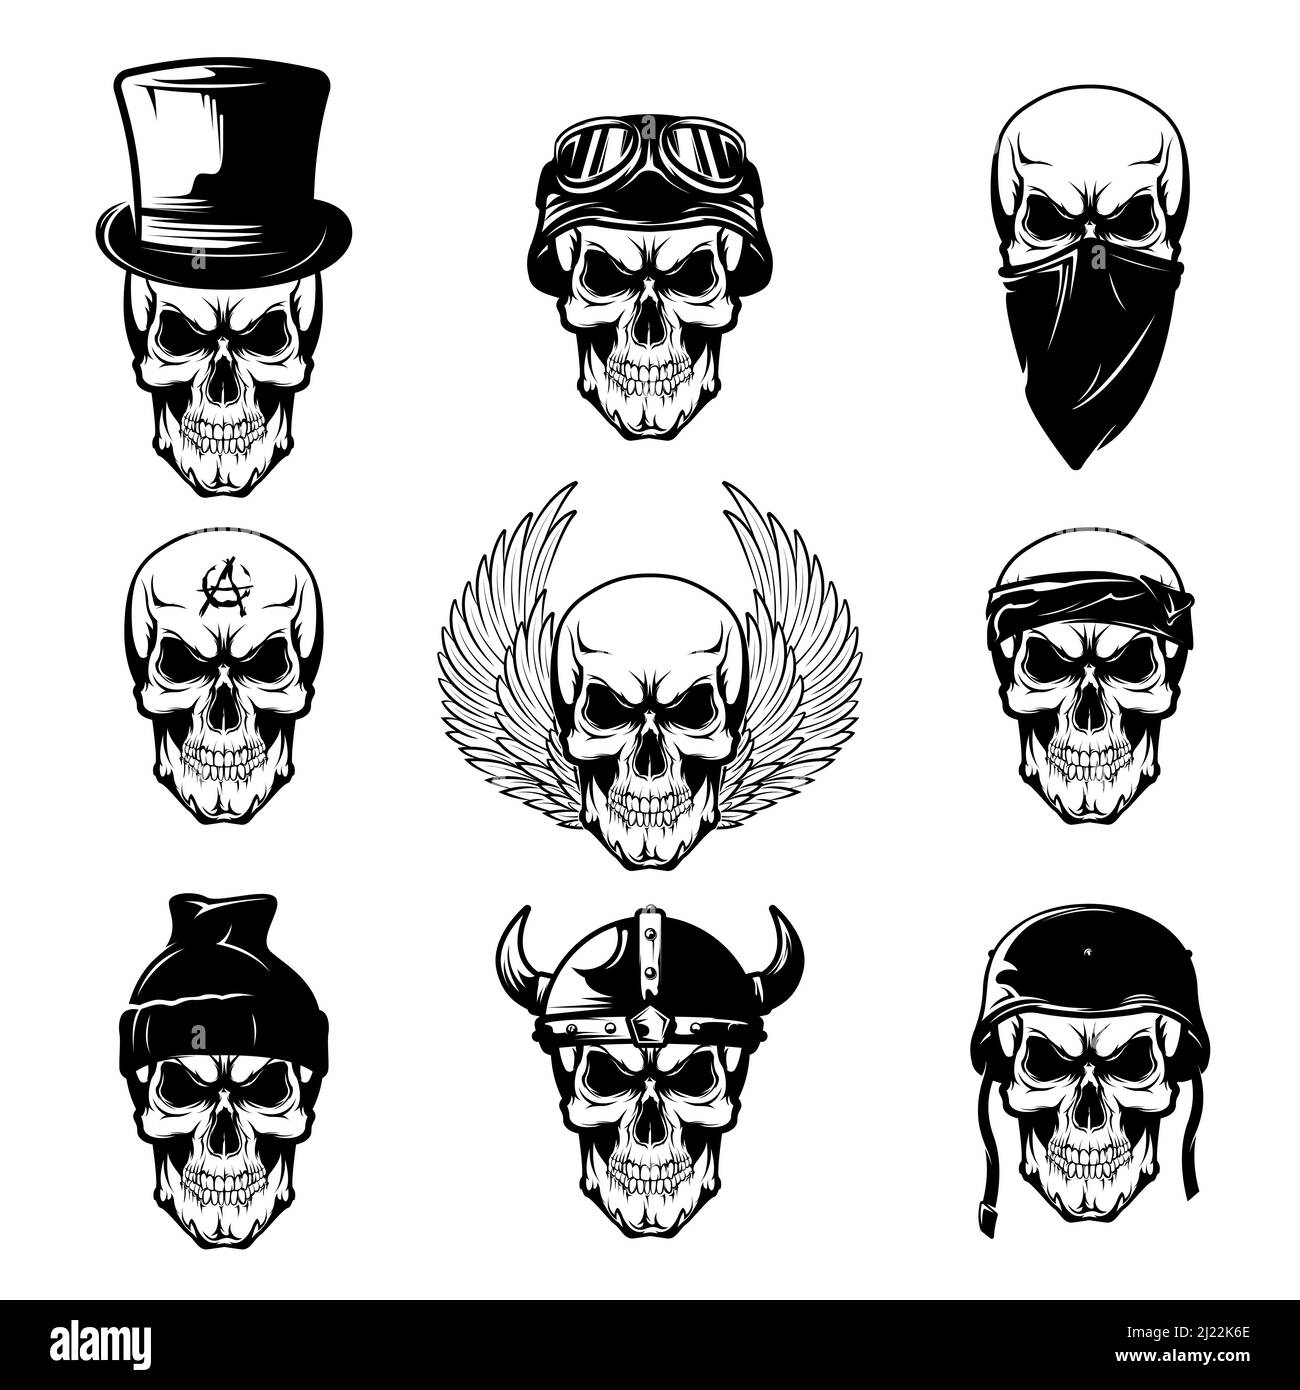 Set of skulls Black and White Stock Photos & Images - Alamy